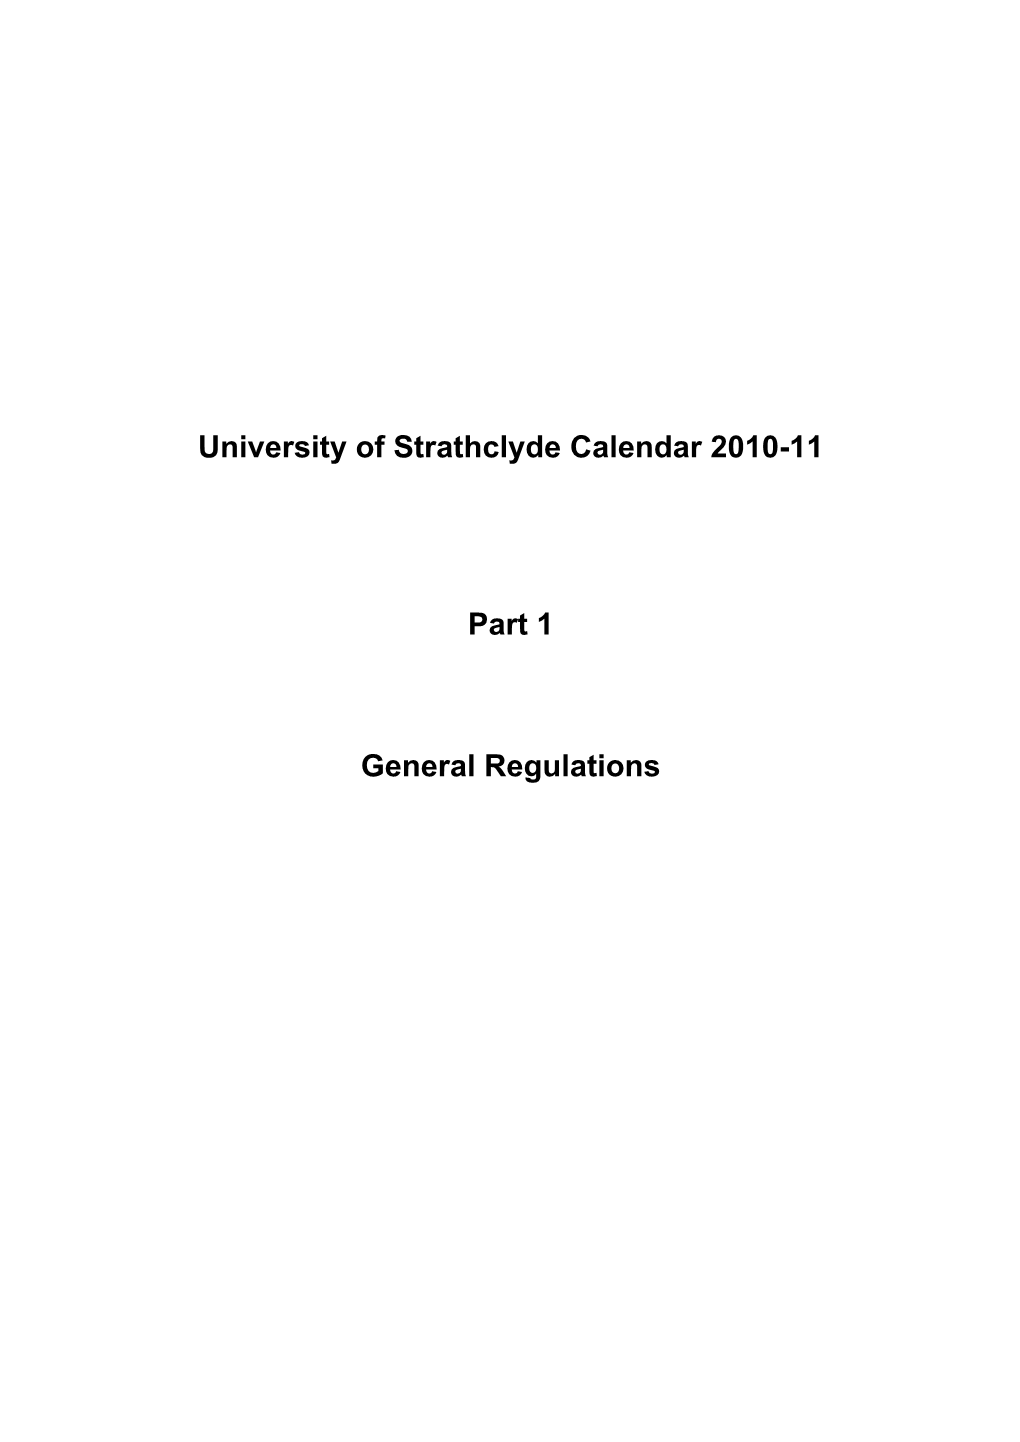 University of Strathclyde Calendar 2010-11 Part 1 General Regulations